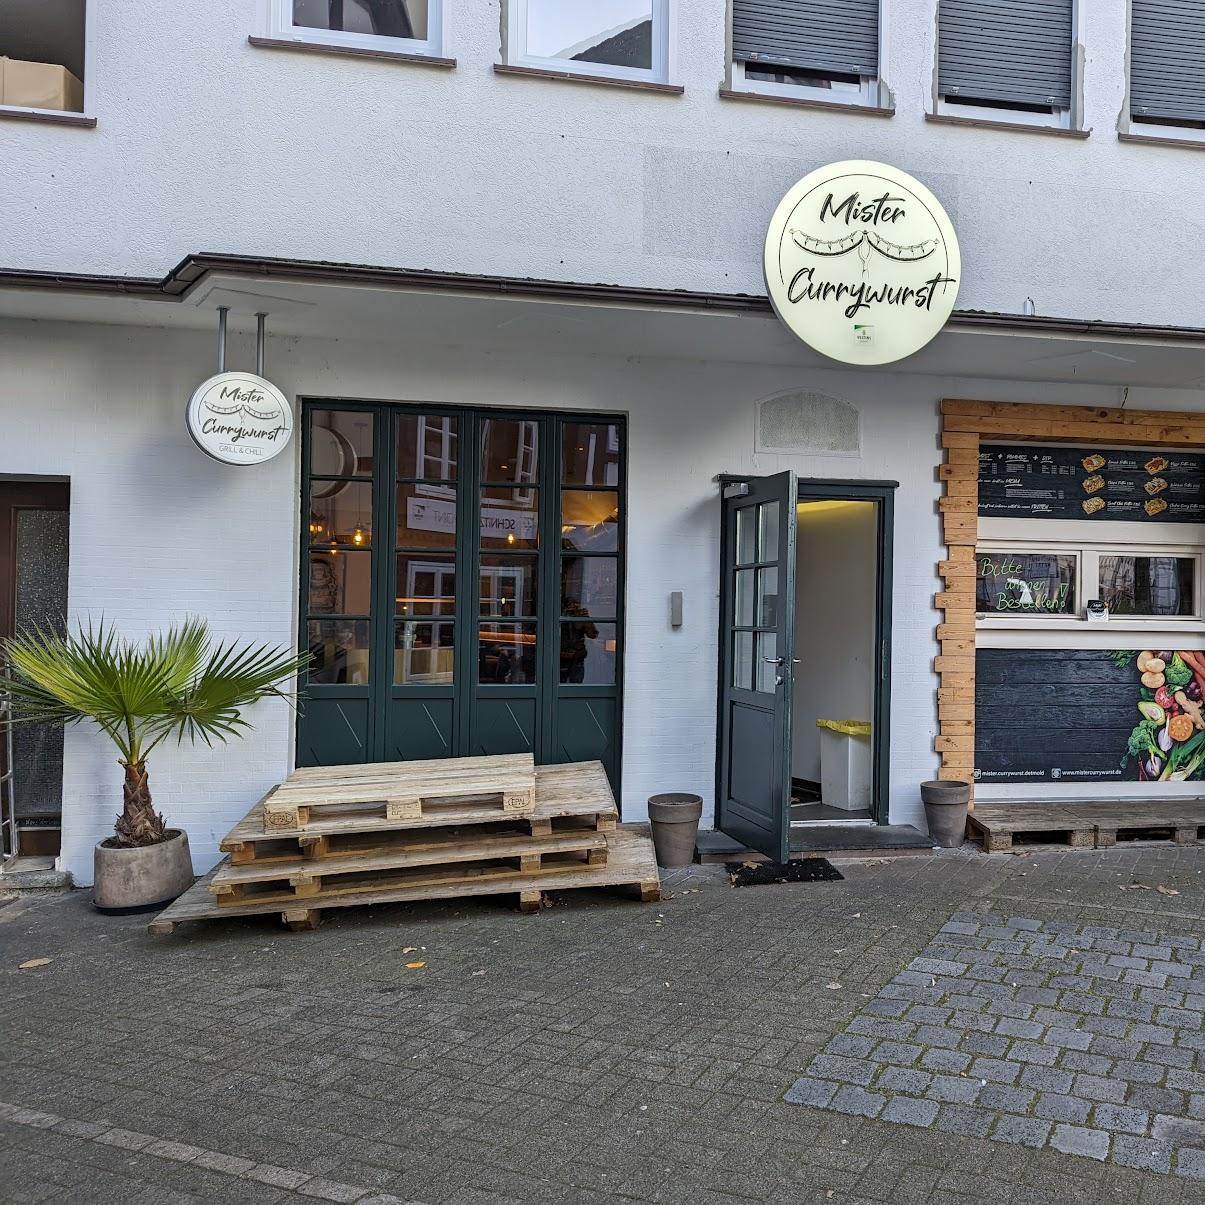 Restaurant "Mister Currywurst" in Detmold